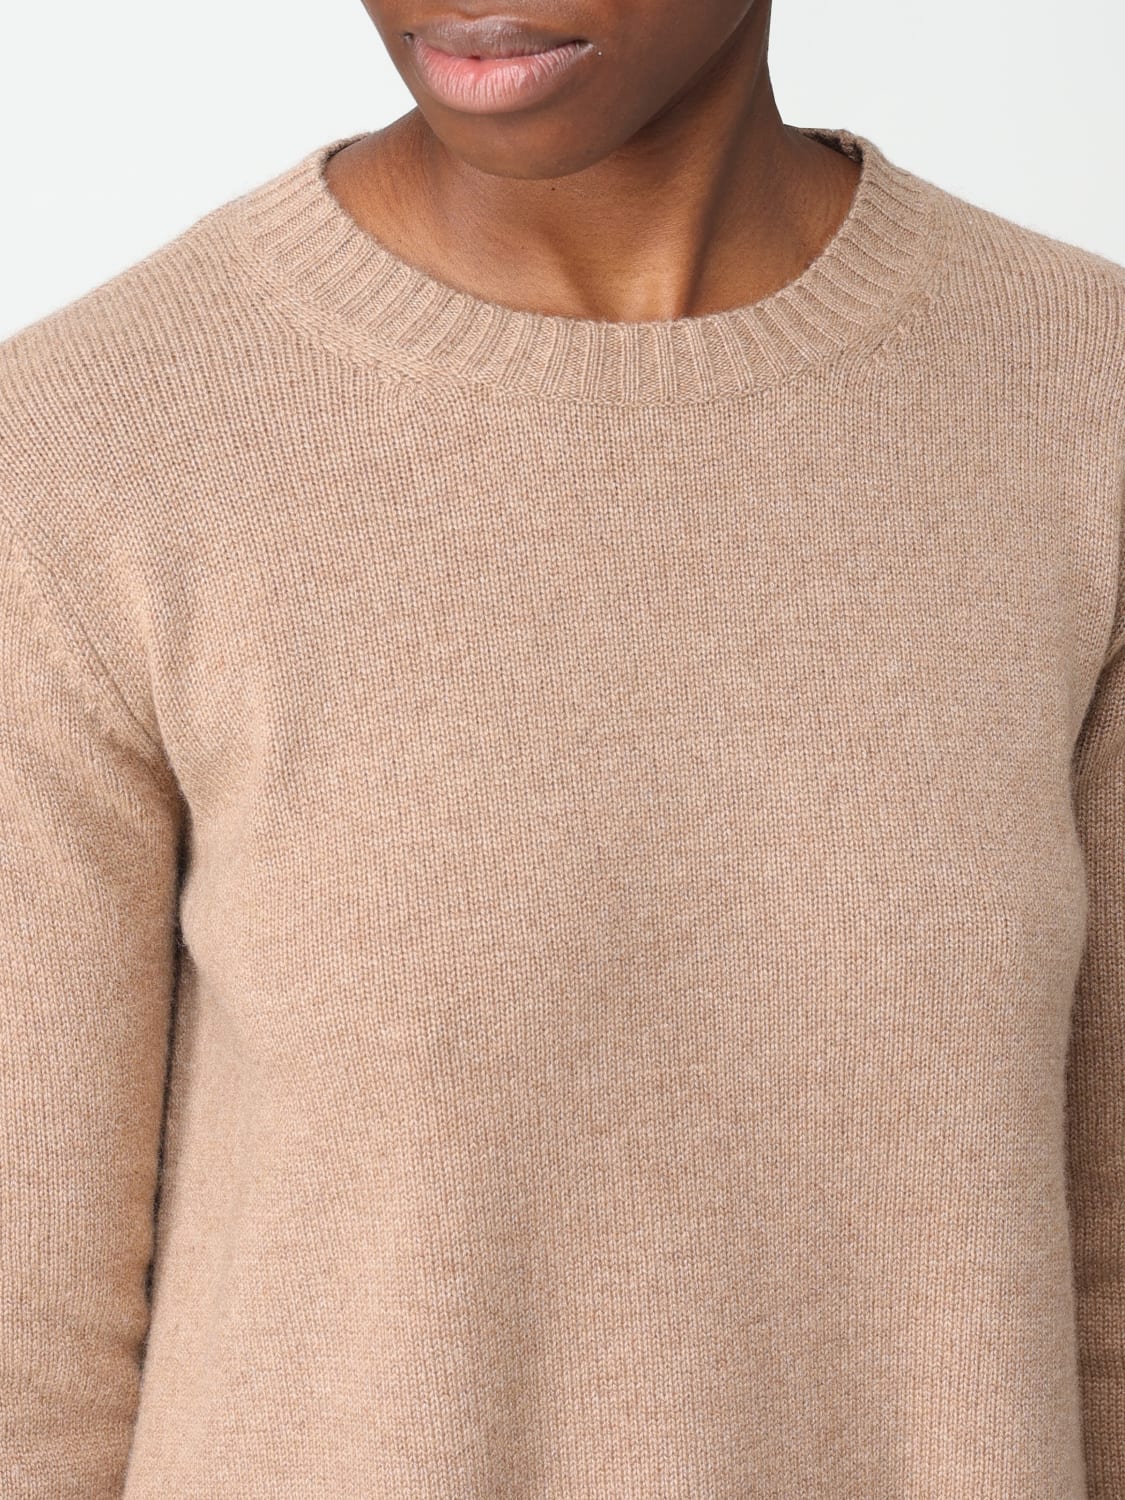 Vince camel sweater キャメル ウール セーター ヴィンス - トップス